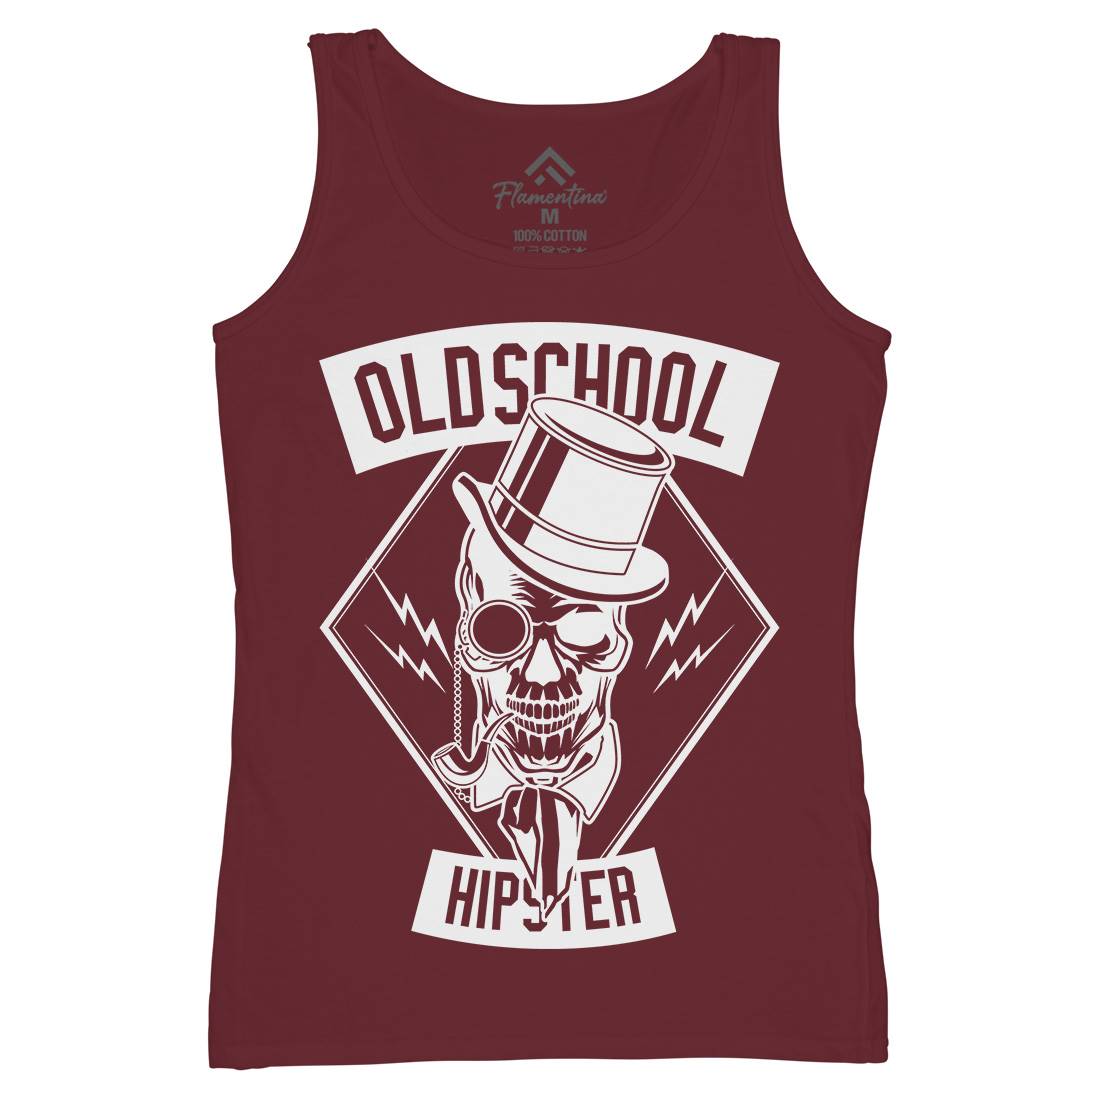 Old School Hipster Womens Organic Tank Top Vest Retro B592